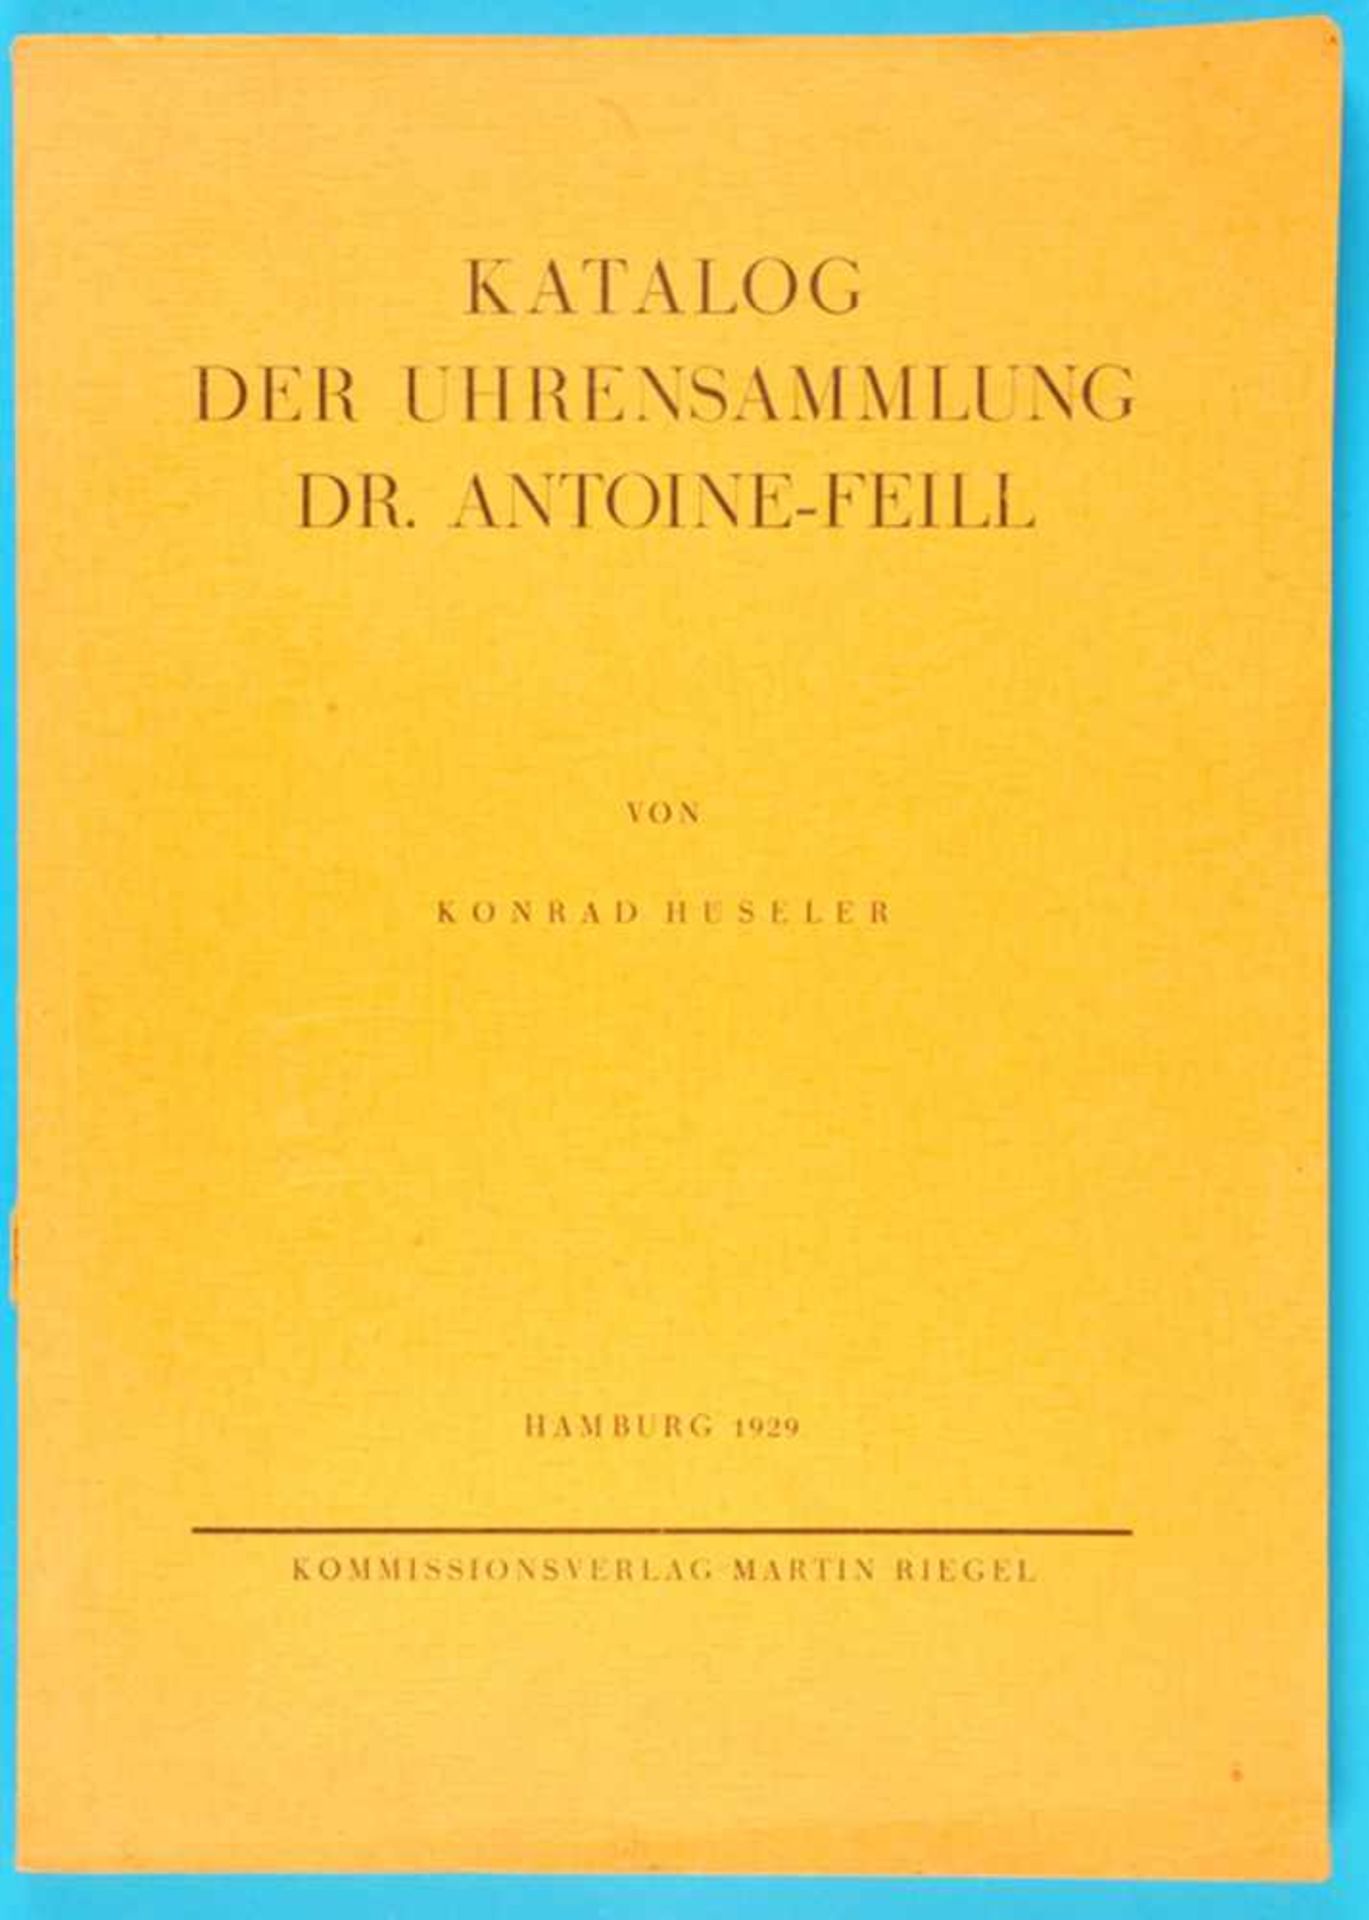 Konrad Hüseler, Katalog der Uhrensammlung Dr. Feill, Hamburg 1929, Katalog einer bedeutenden